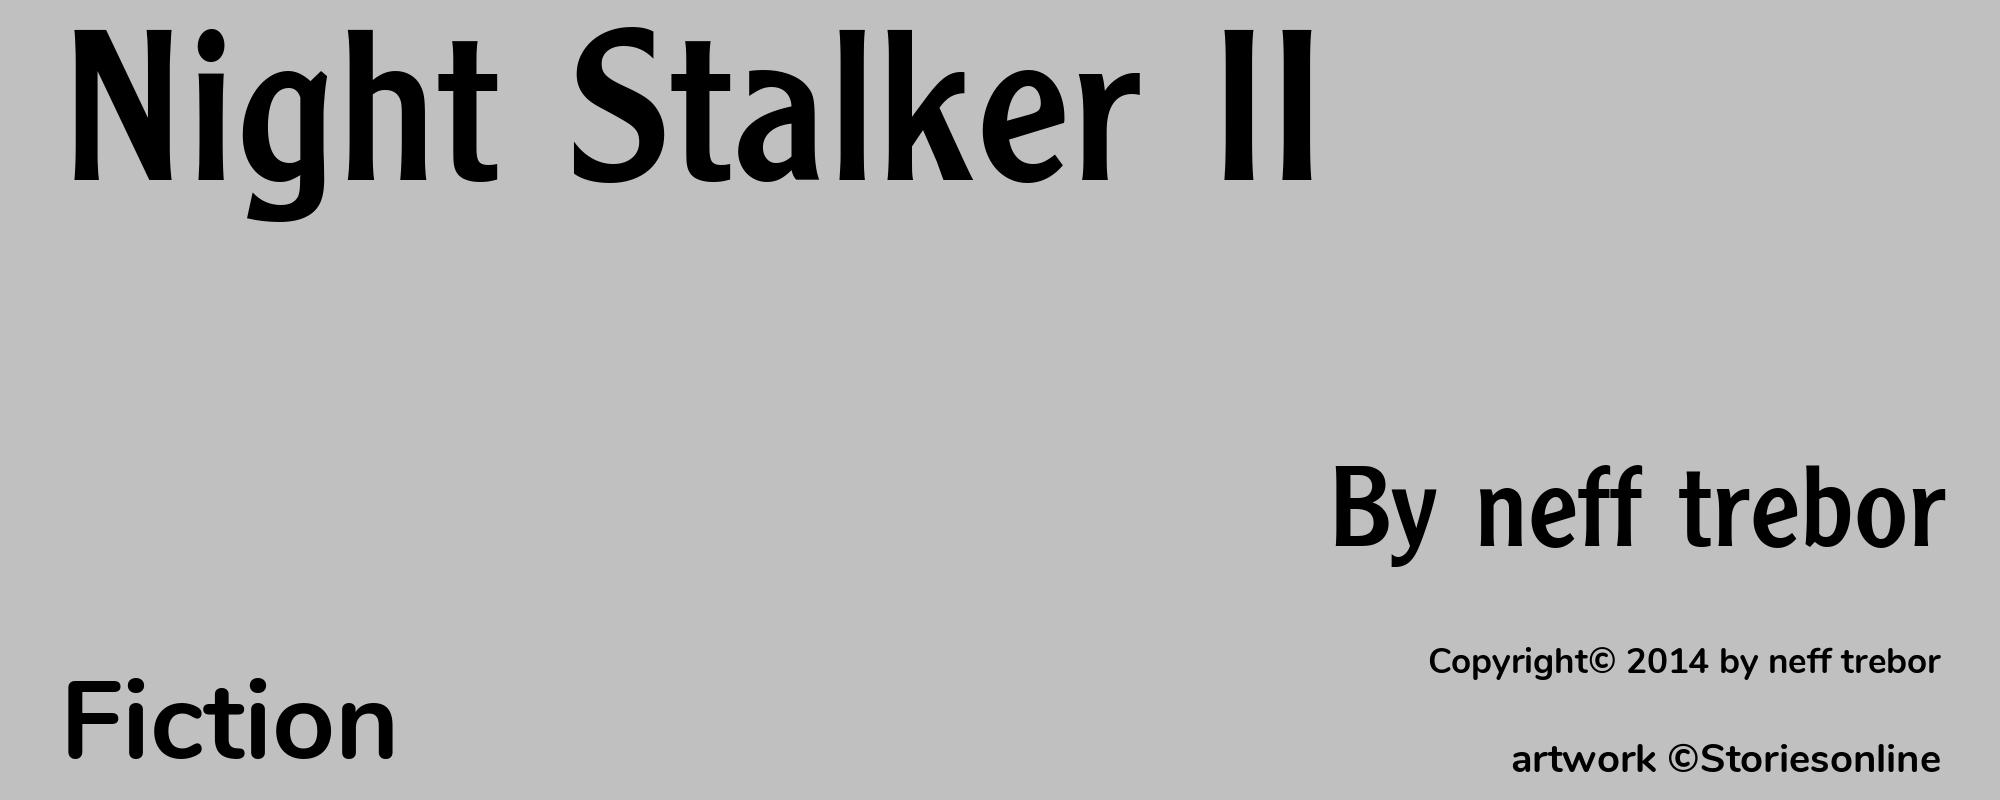 Night Stalker II - Cover